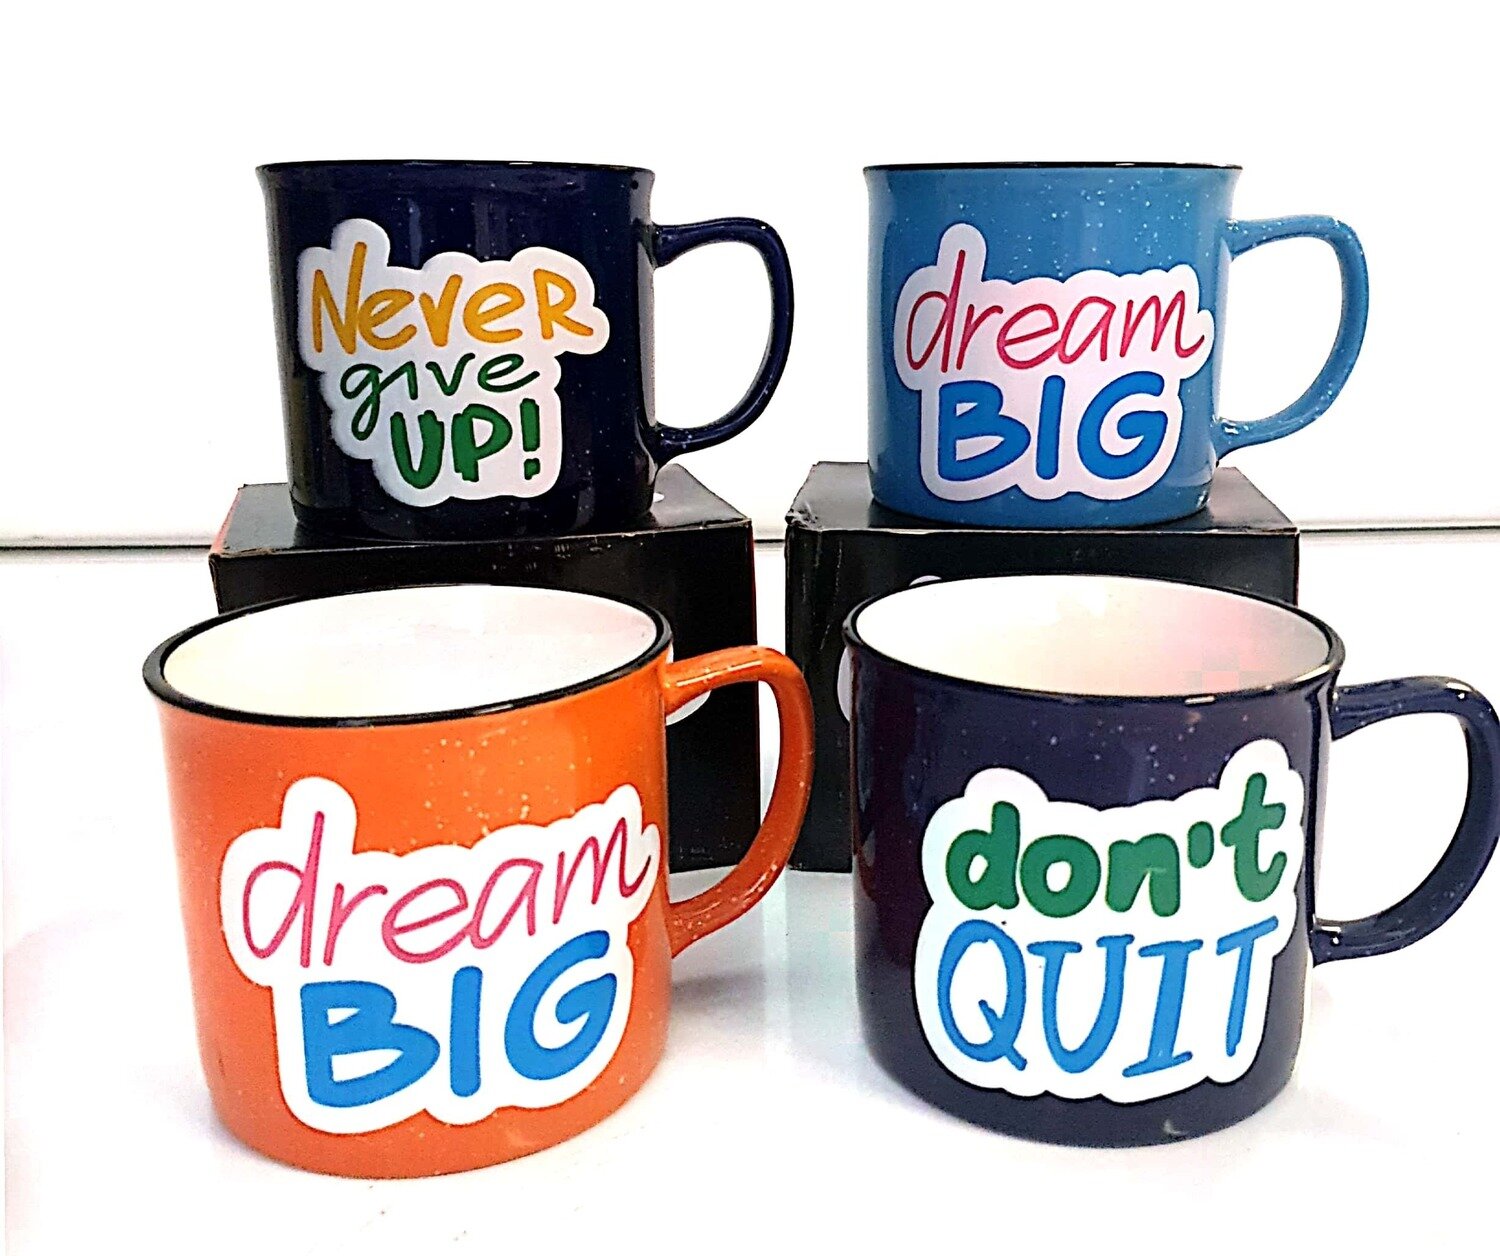 Never Give Up Mug